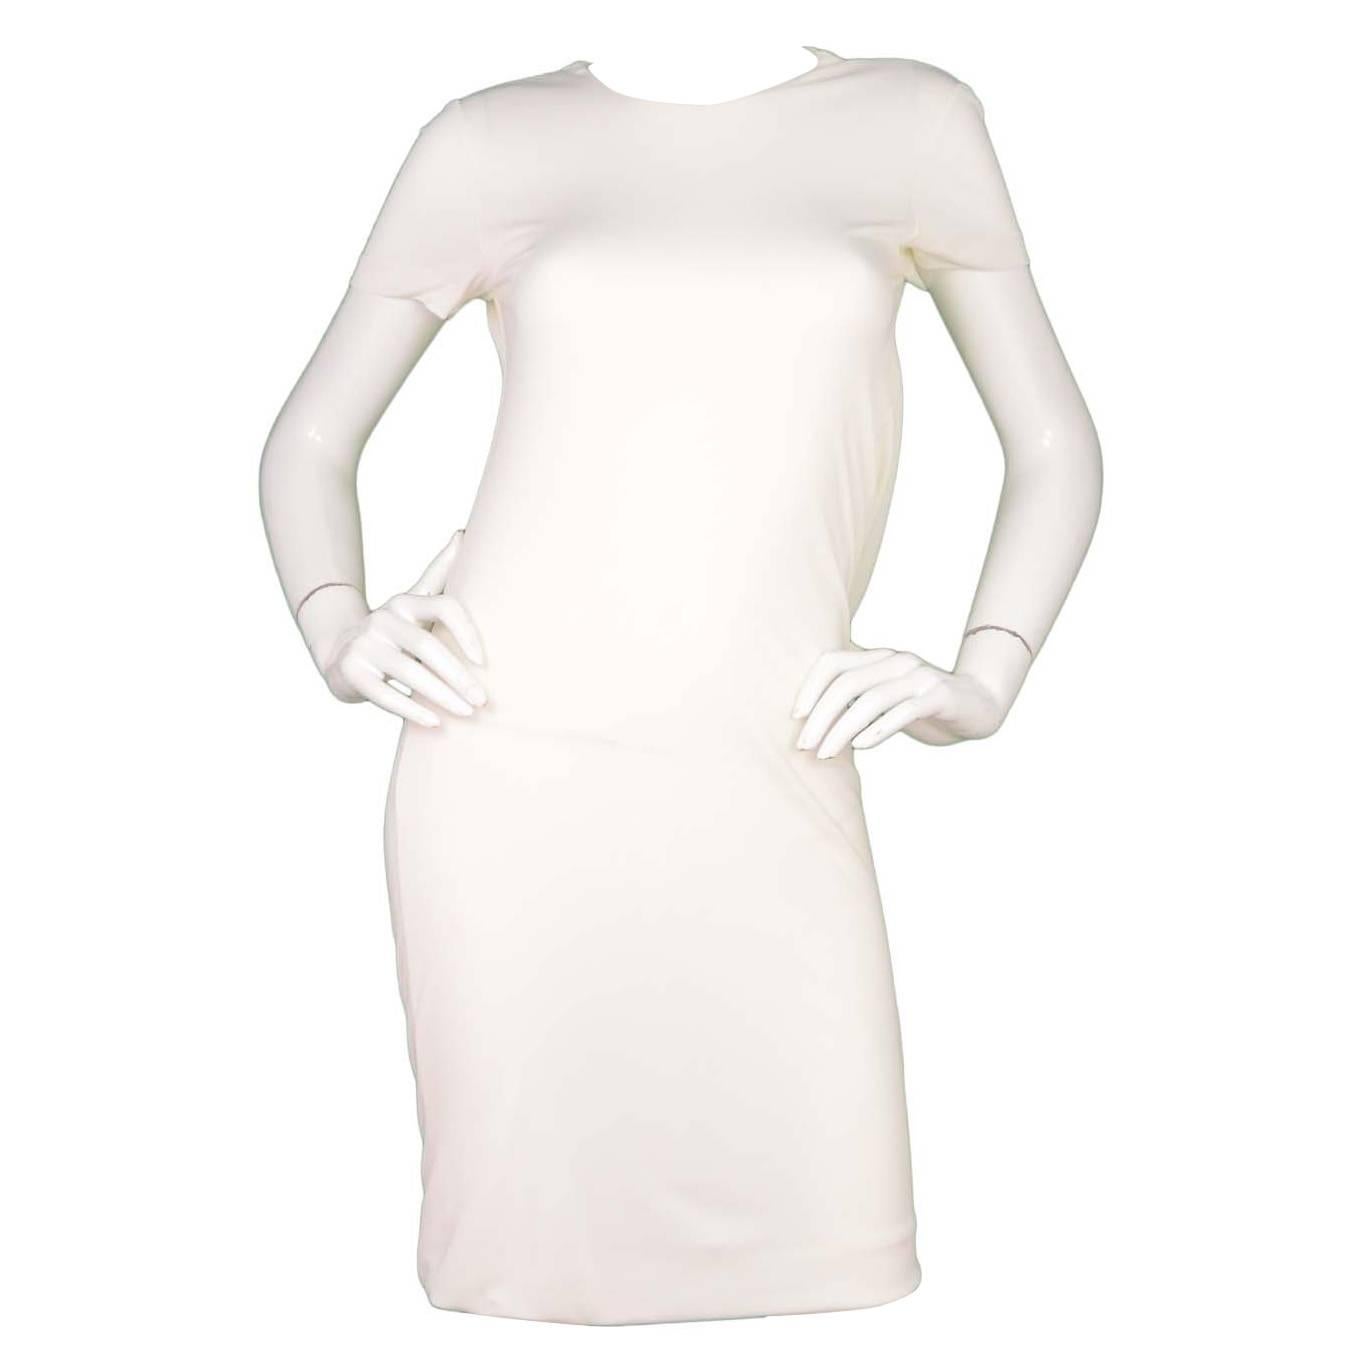 Gucci Off-White Short Sleeve Sheath Dress sz XXS